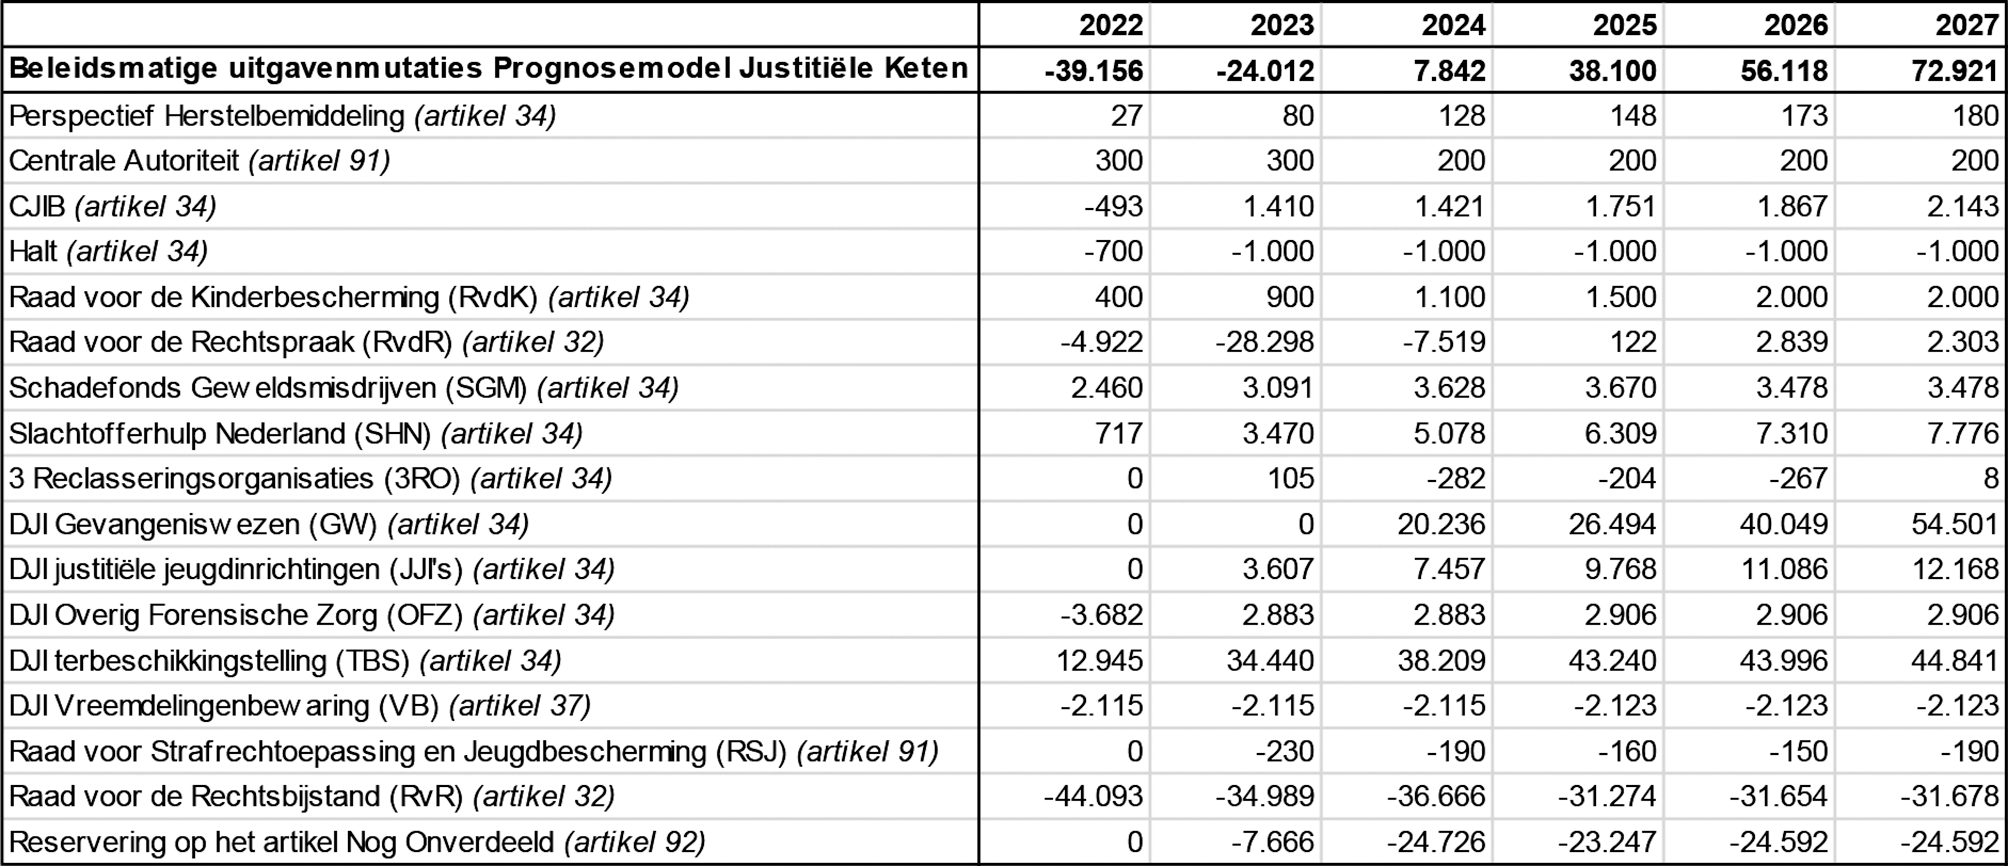 Tabel. Ontwerpbegroting 2023 Justitie en Veiligheid: PMJ beleidsmatige uitgavenmutaties per beleidsartikel (bedragen x € 1.000)